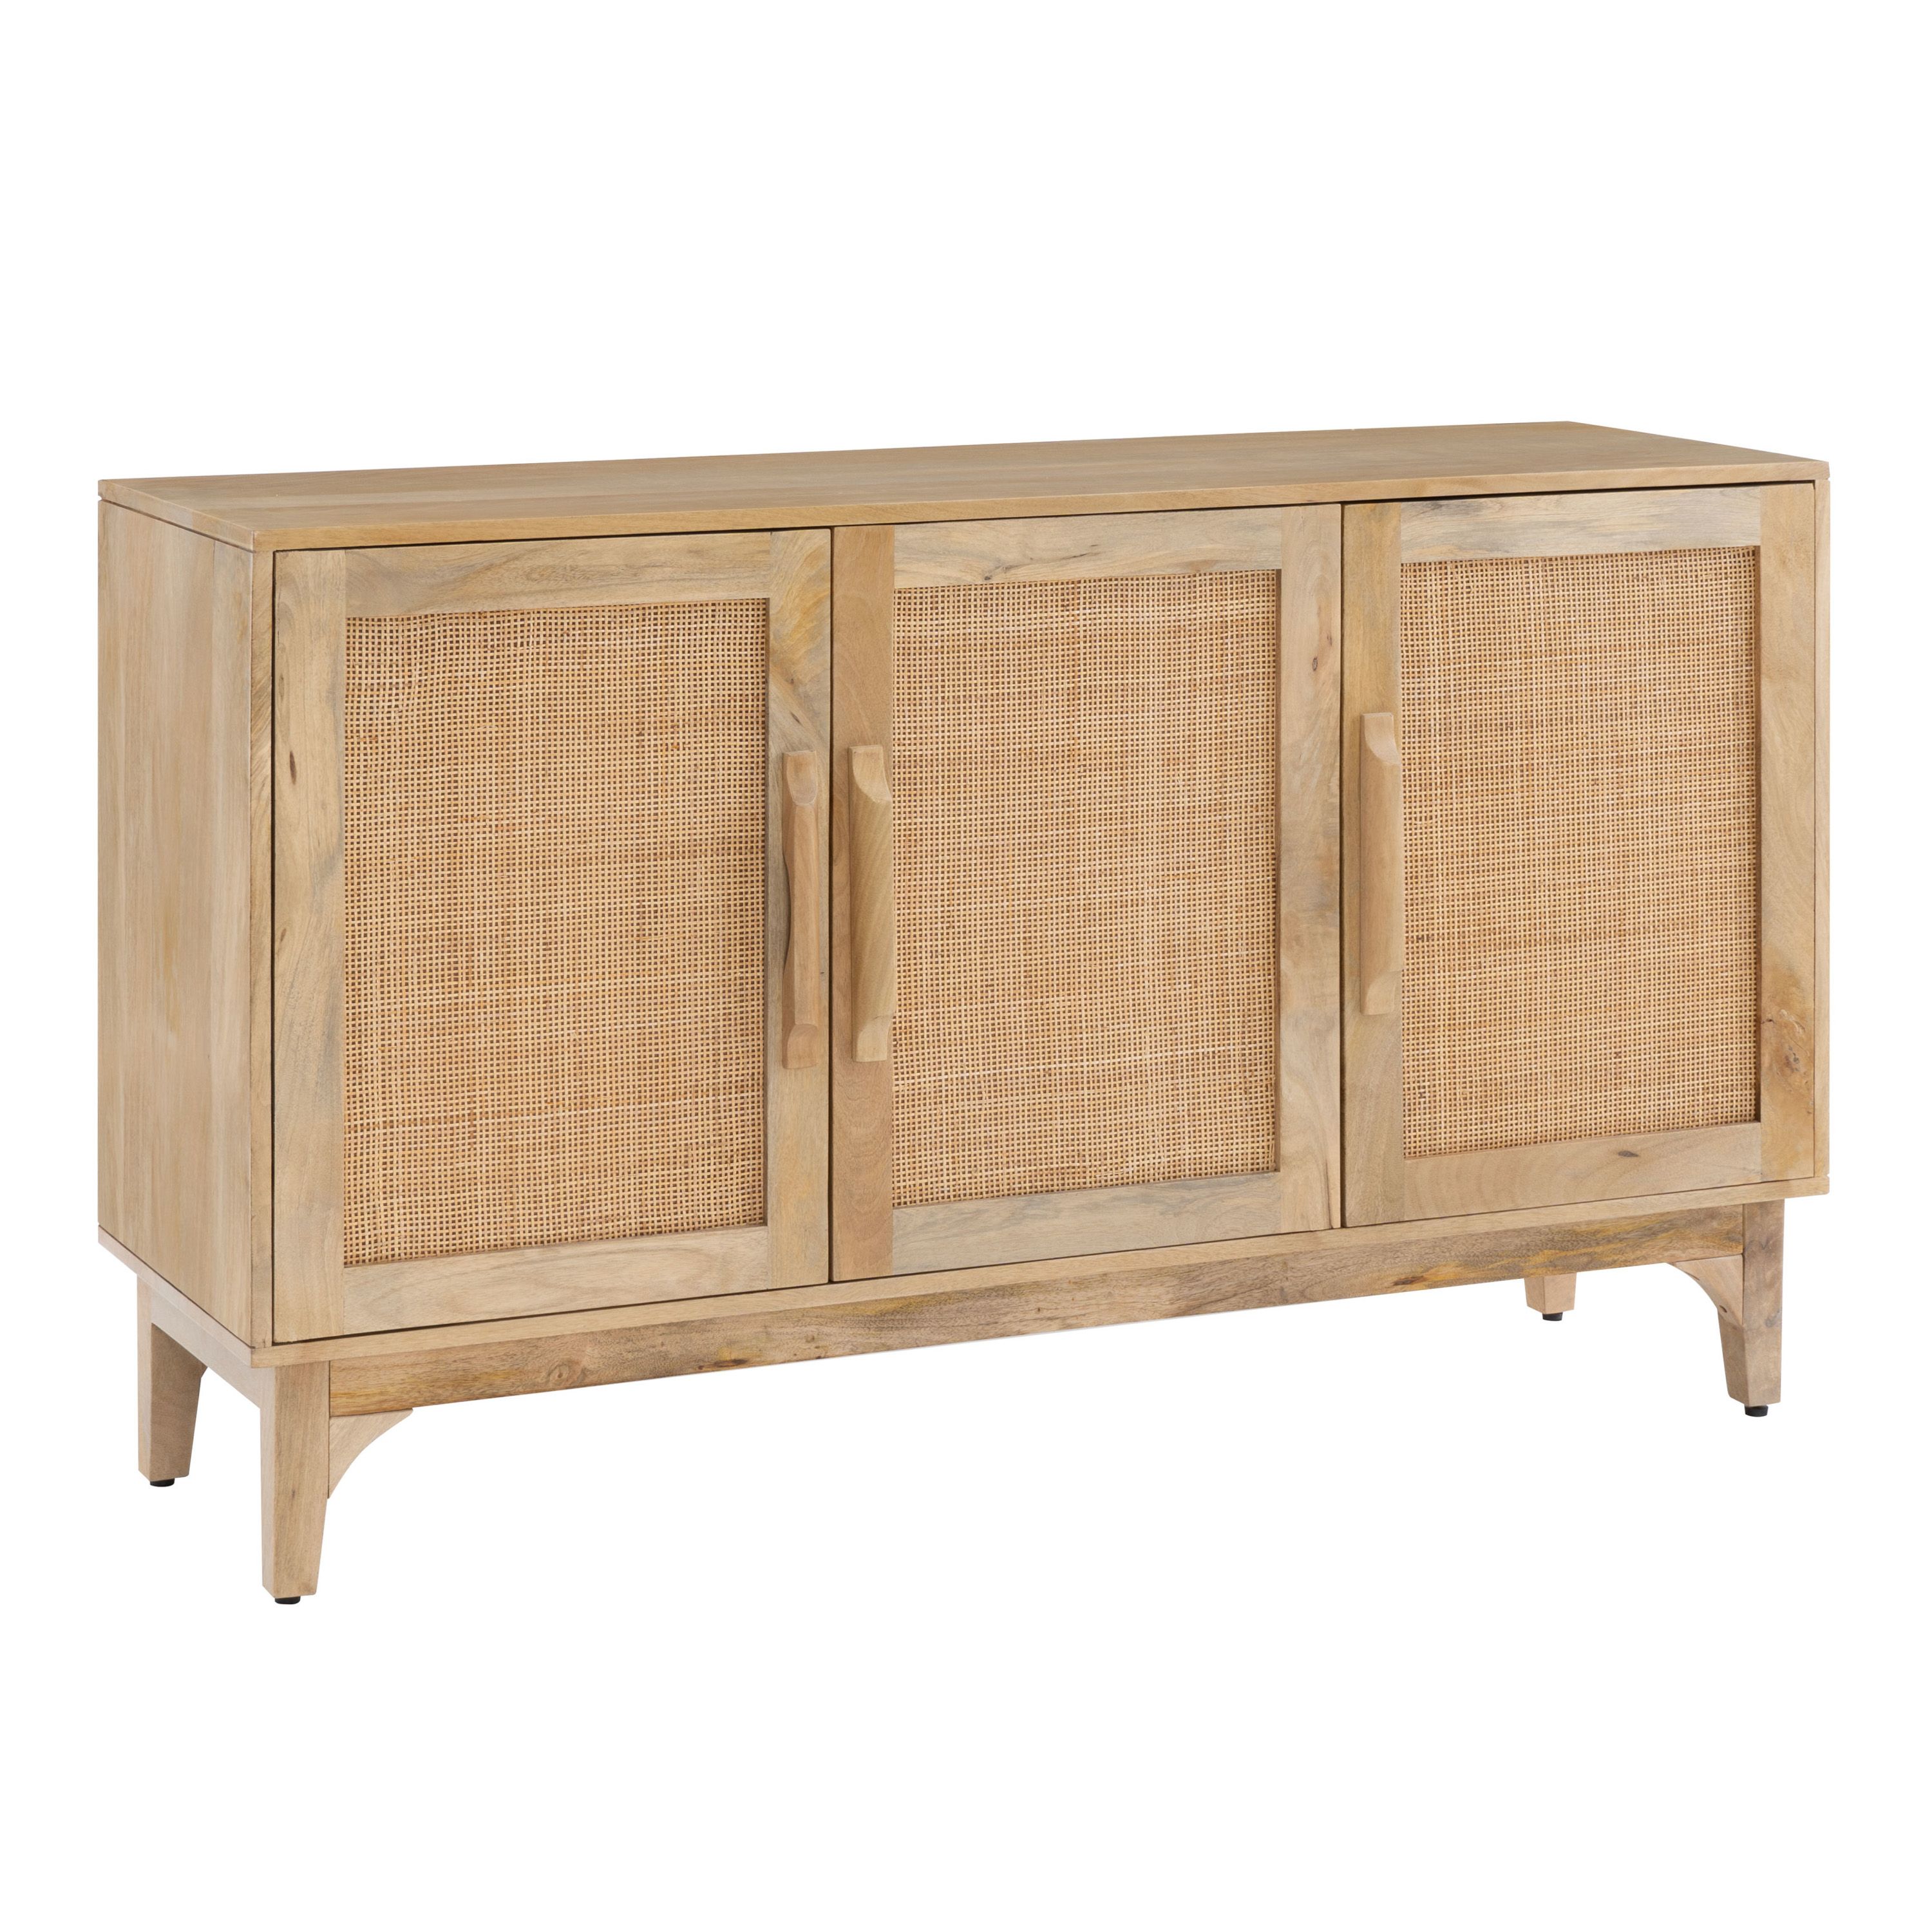 Cresset Wood and Rattan Cane 3 Door Storage Cabinet | World Market